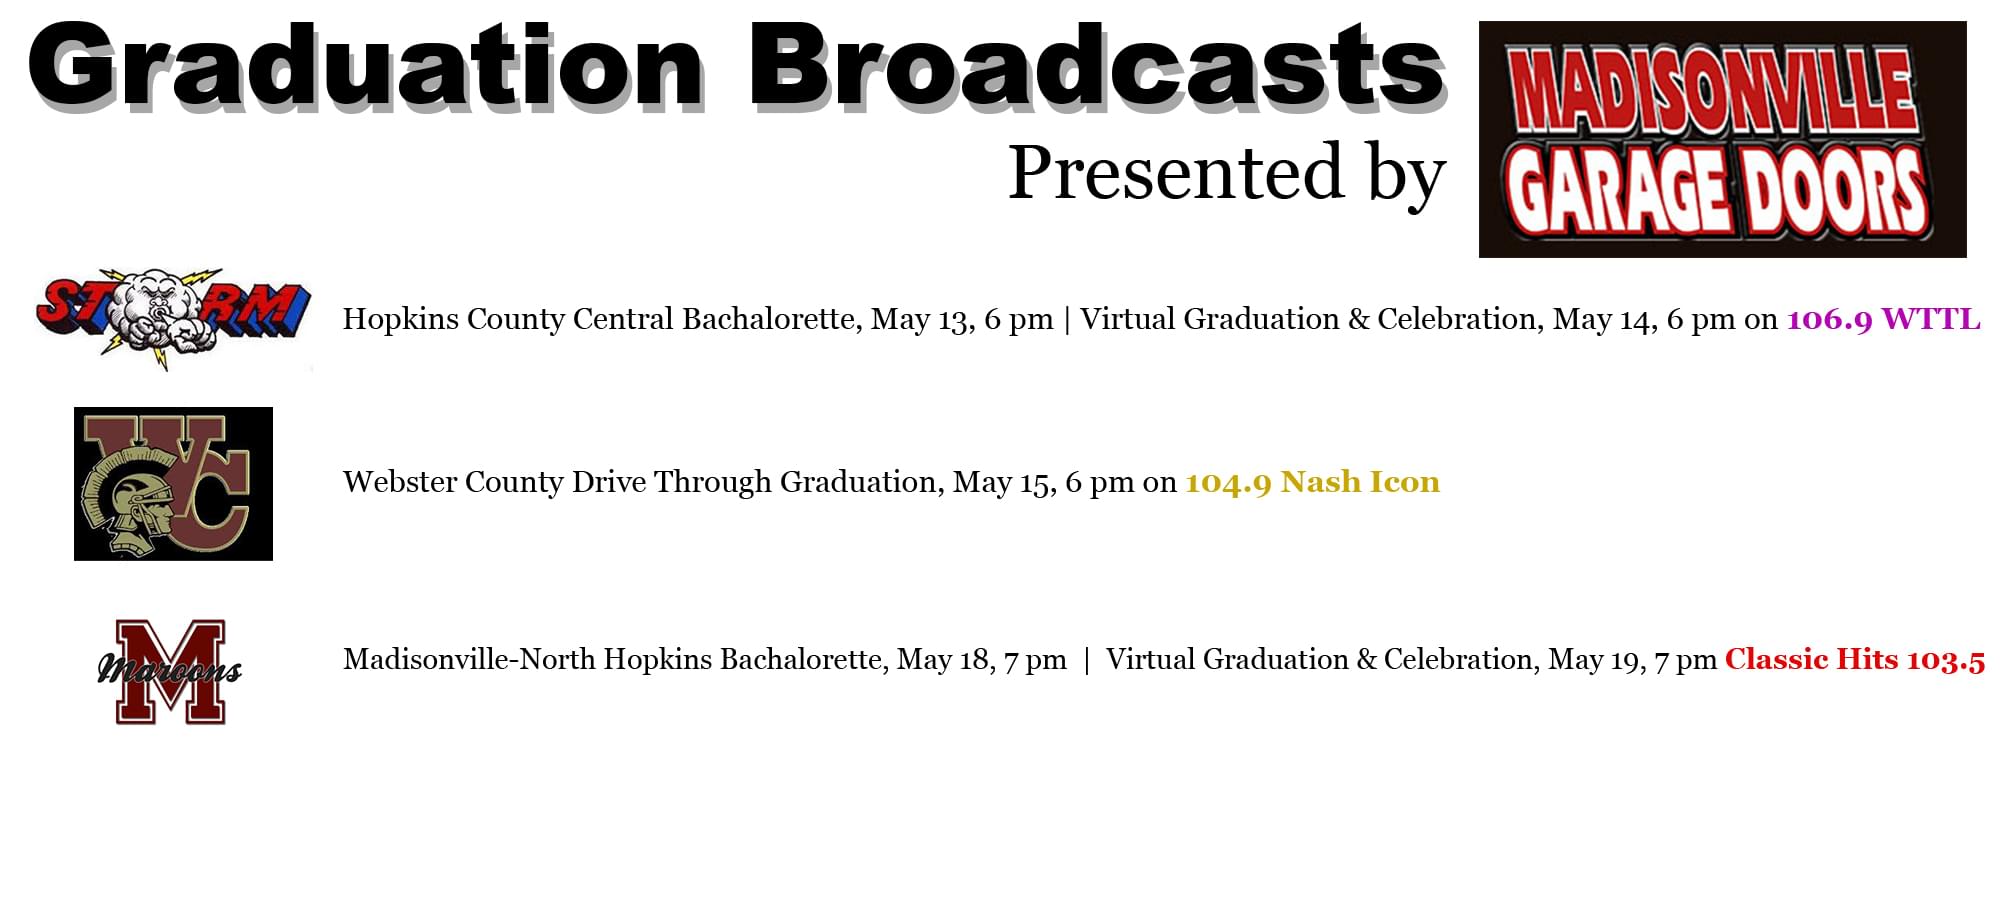 Graduation Broadcasts